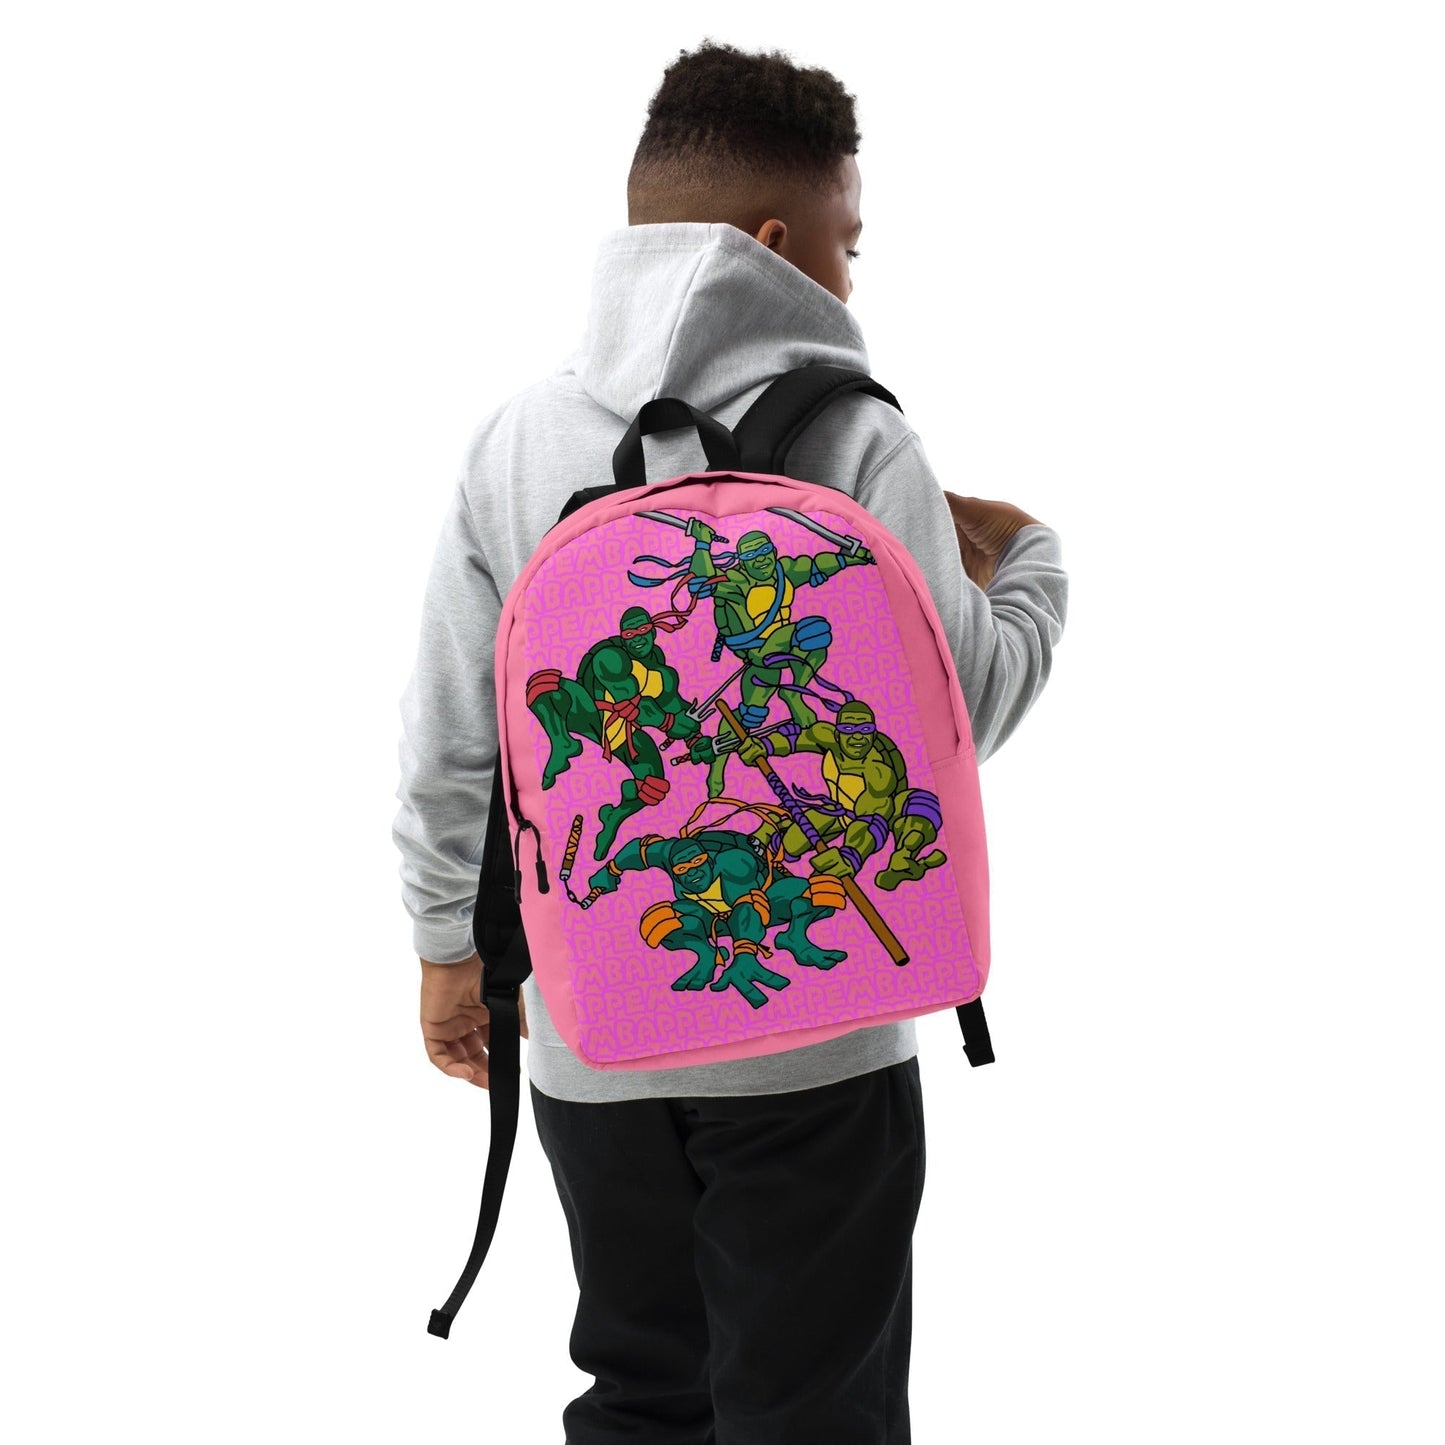 Kylian Mbappe Ninja Turtles funny football/ soccer meme Minimalist Backpack pink Next Cult Brand Football, Kylian Mbappe, Ninja Turtles, PSG